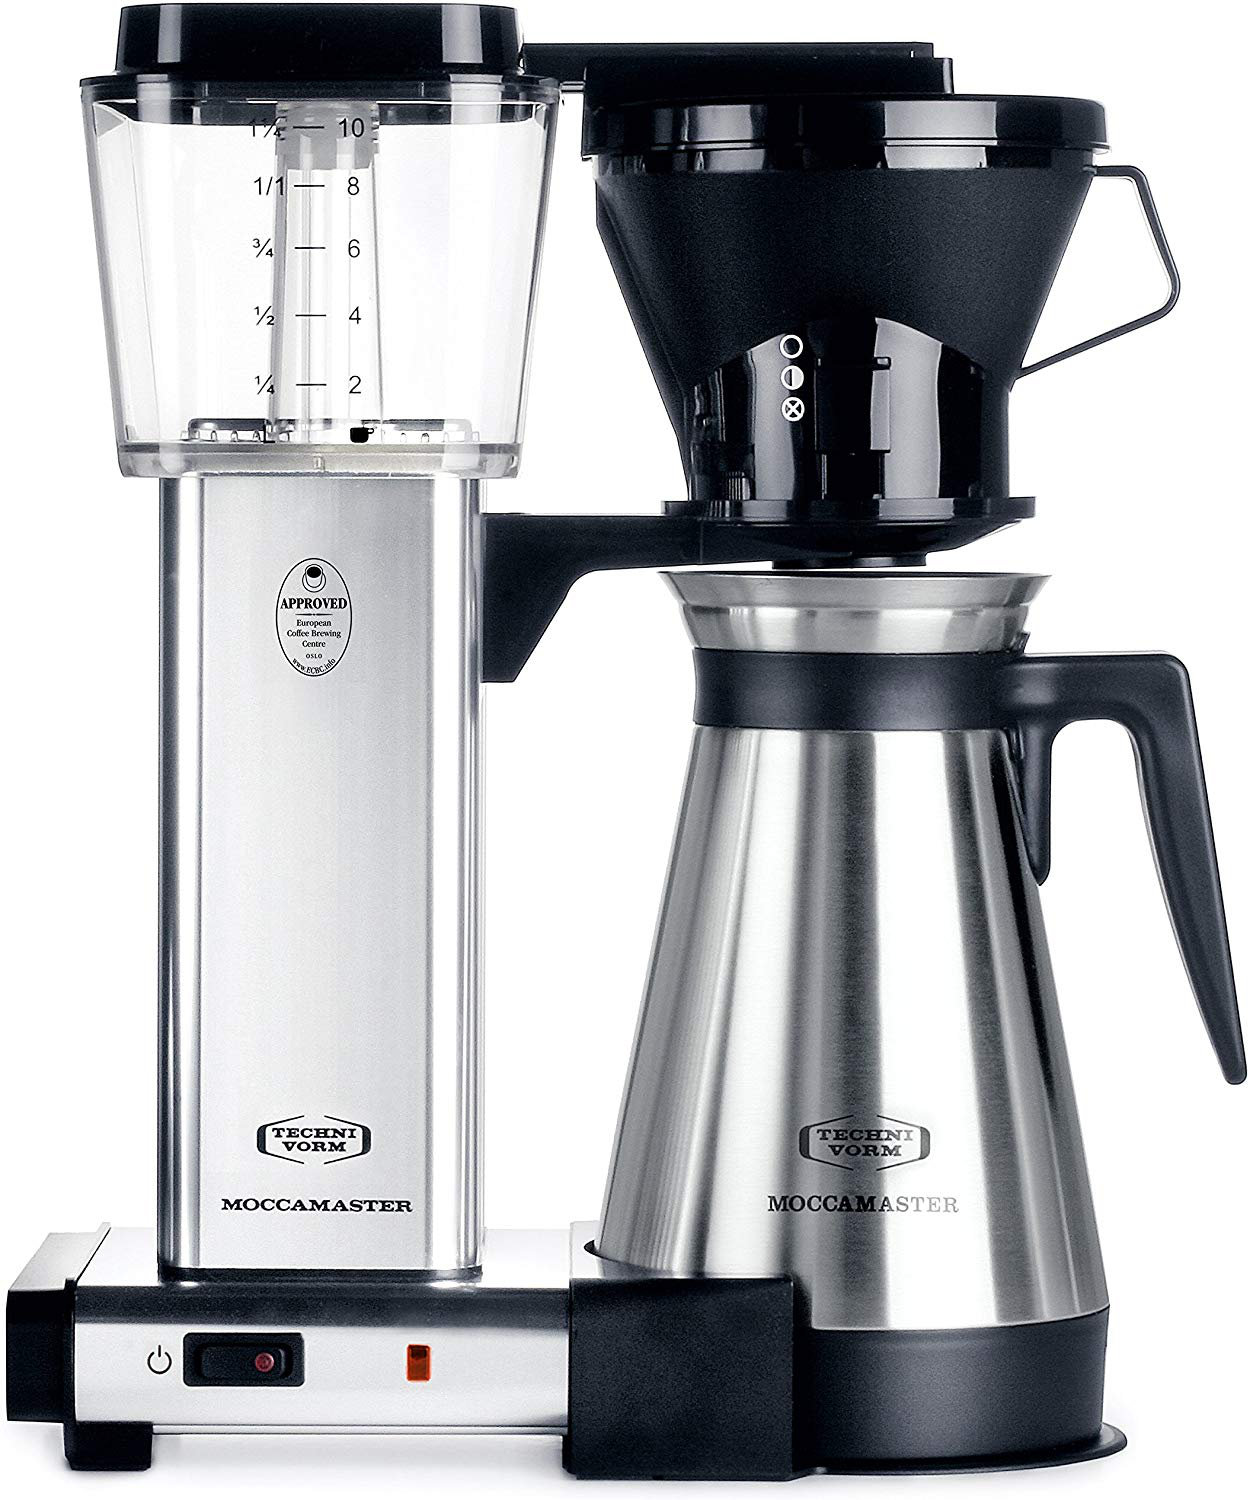 Moccamaster 10-Cup Coffee Maker Reviews | Wayfair